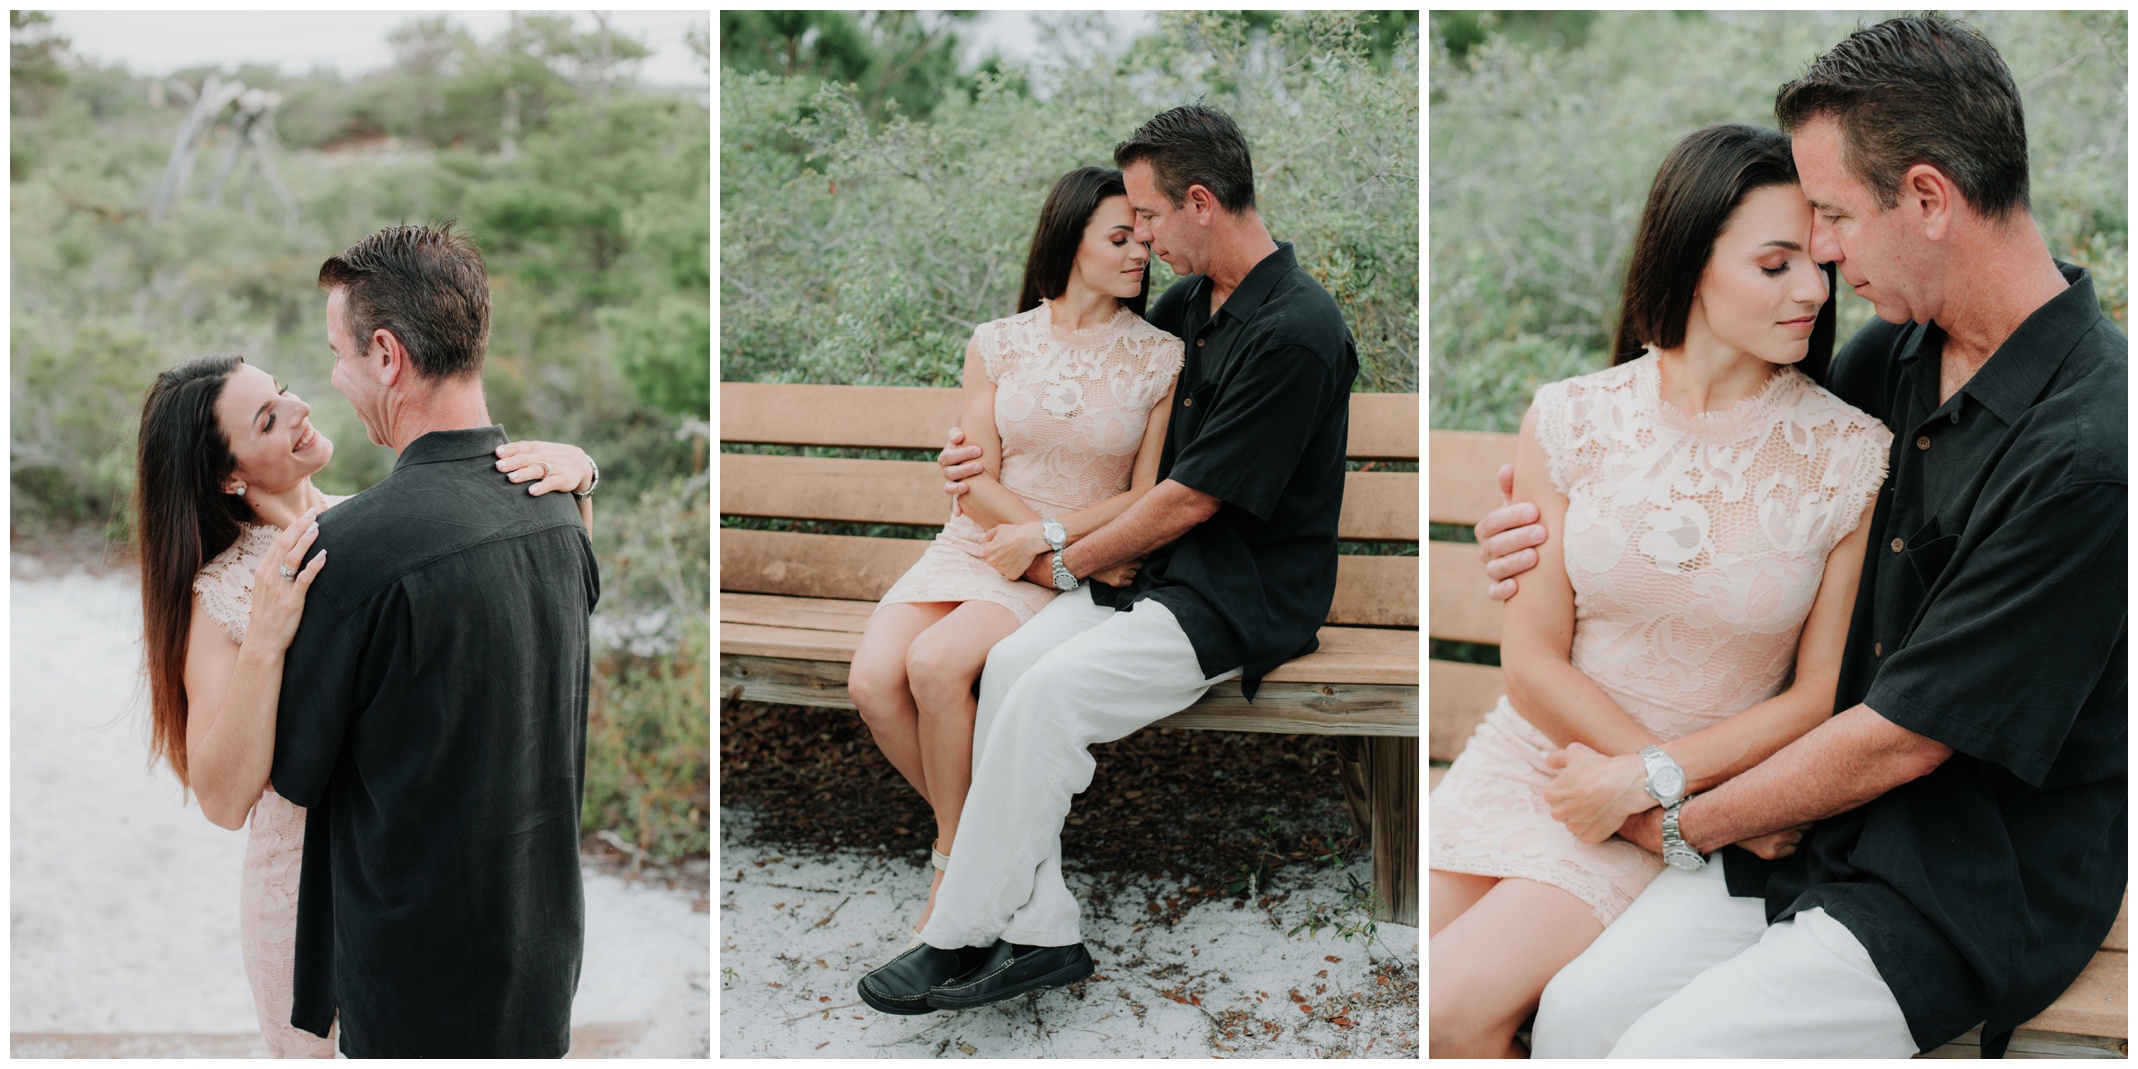 Romantic engagement photos taken by South Florida Wedding Photographer